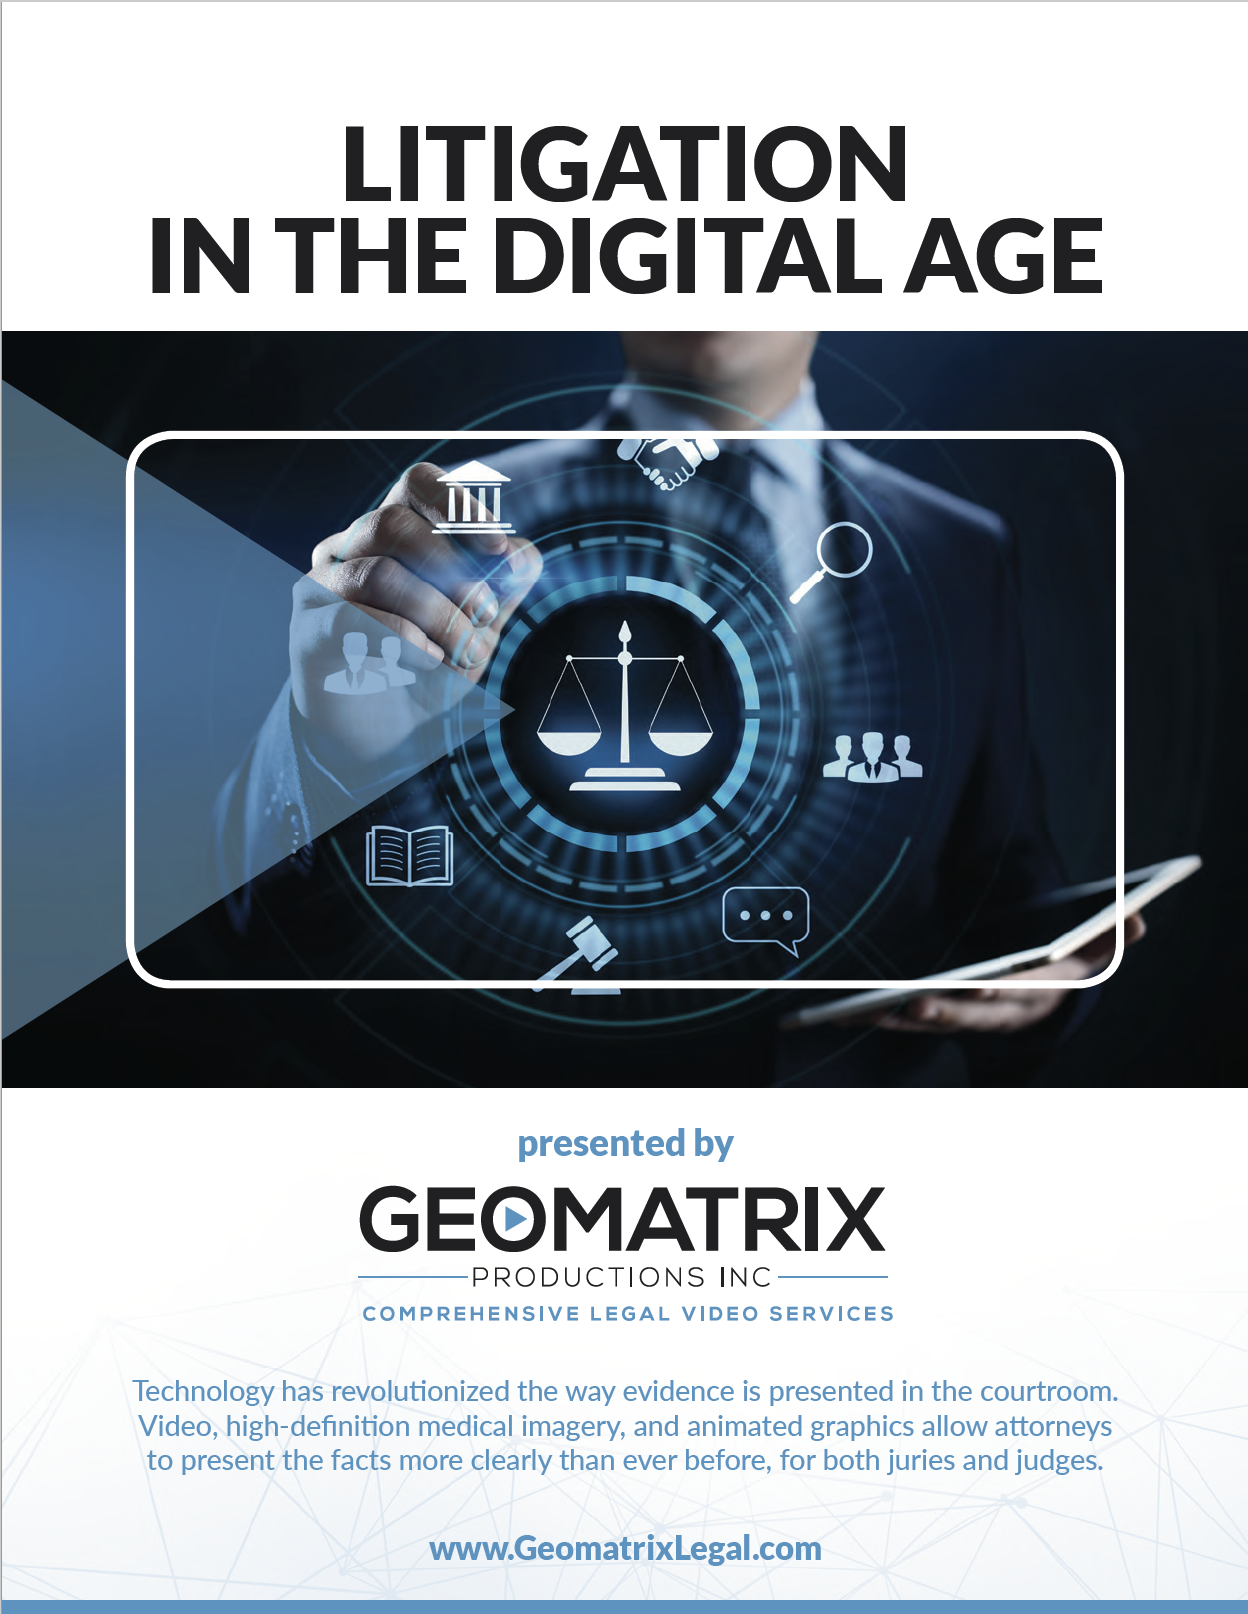 Geomatrix Digital Litigation Whitepaper